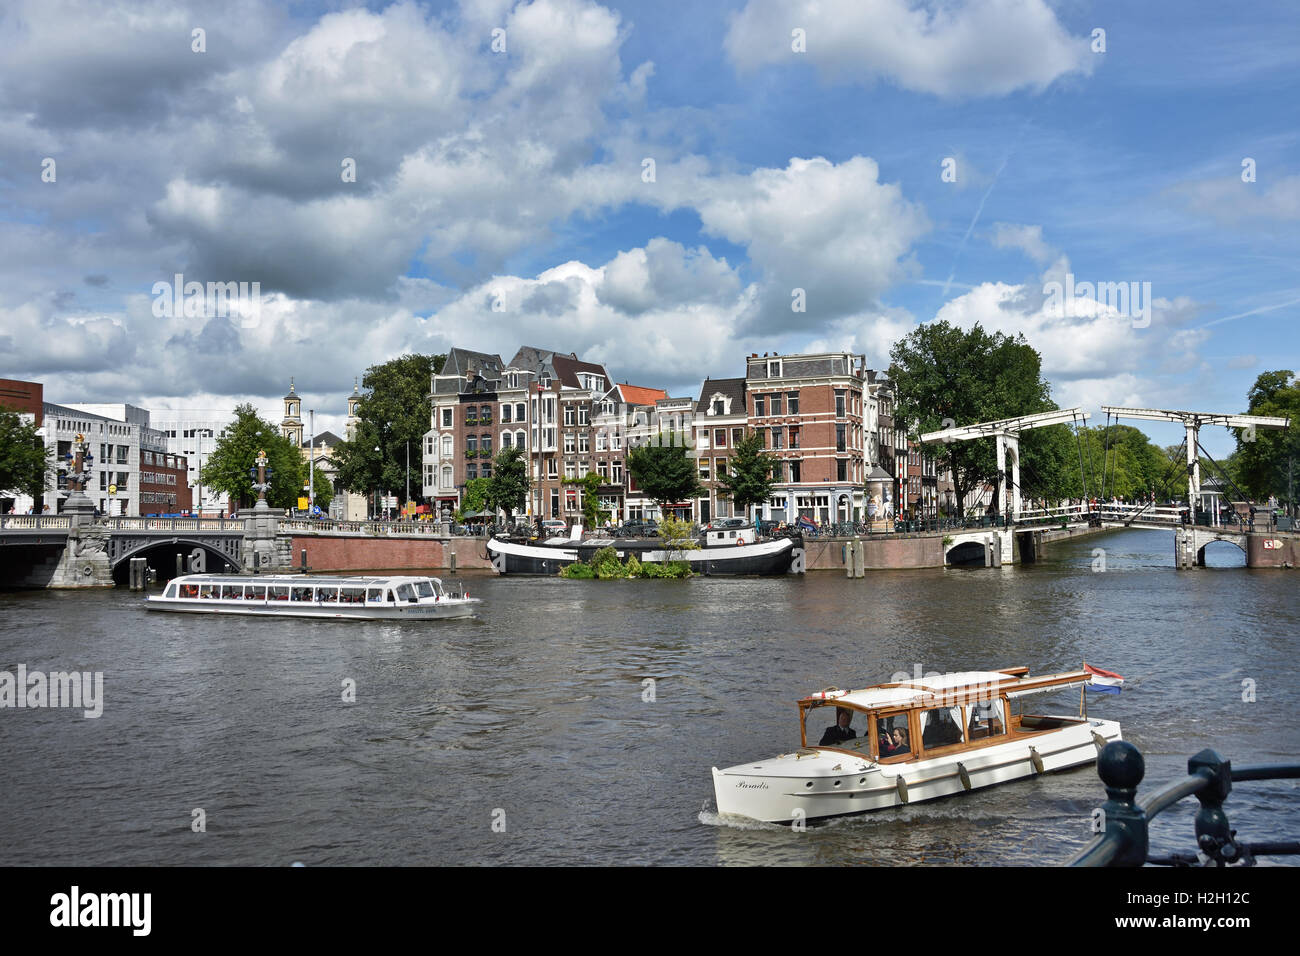 Amstel - Walter Suskindbrug Amsterdam Niederlande Niederlande Stockfoto